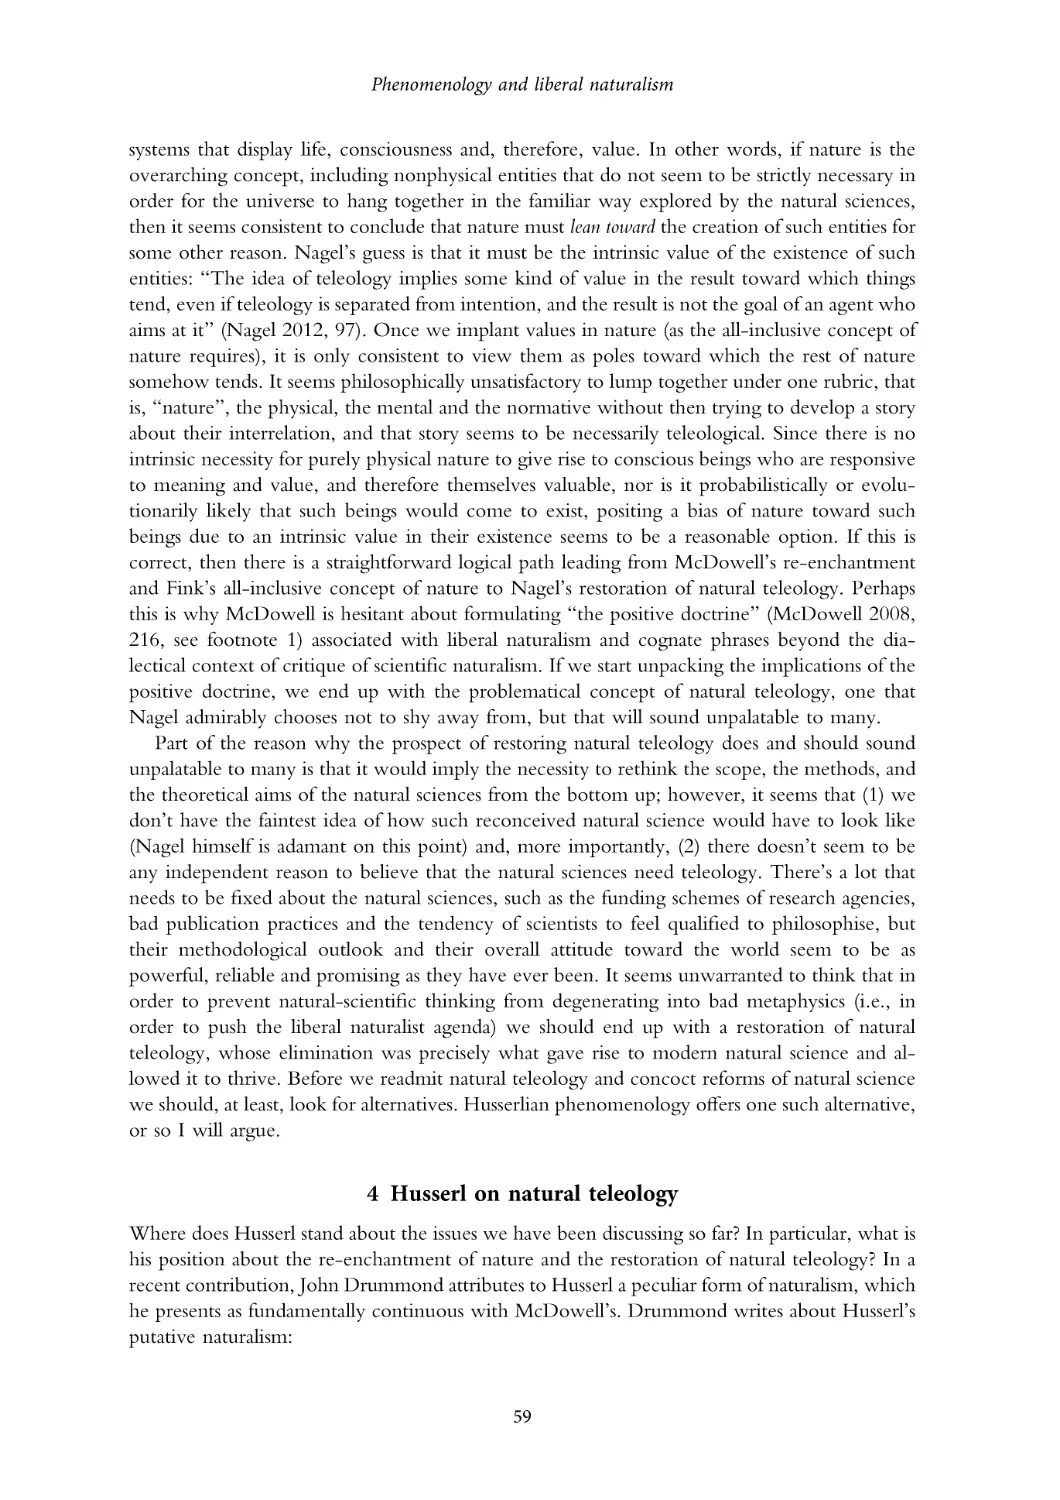 4. Husserl on natural teleology